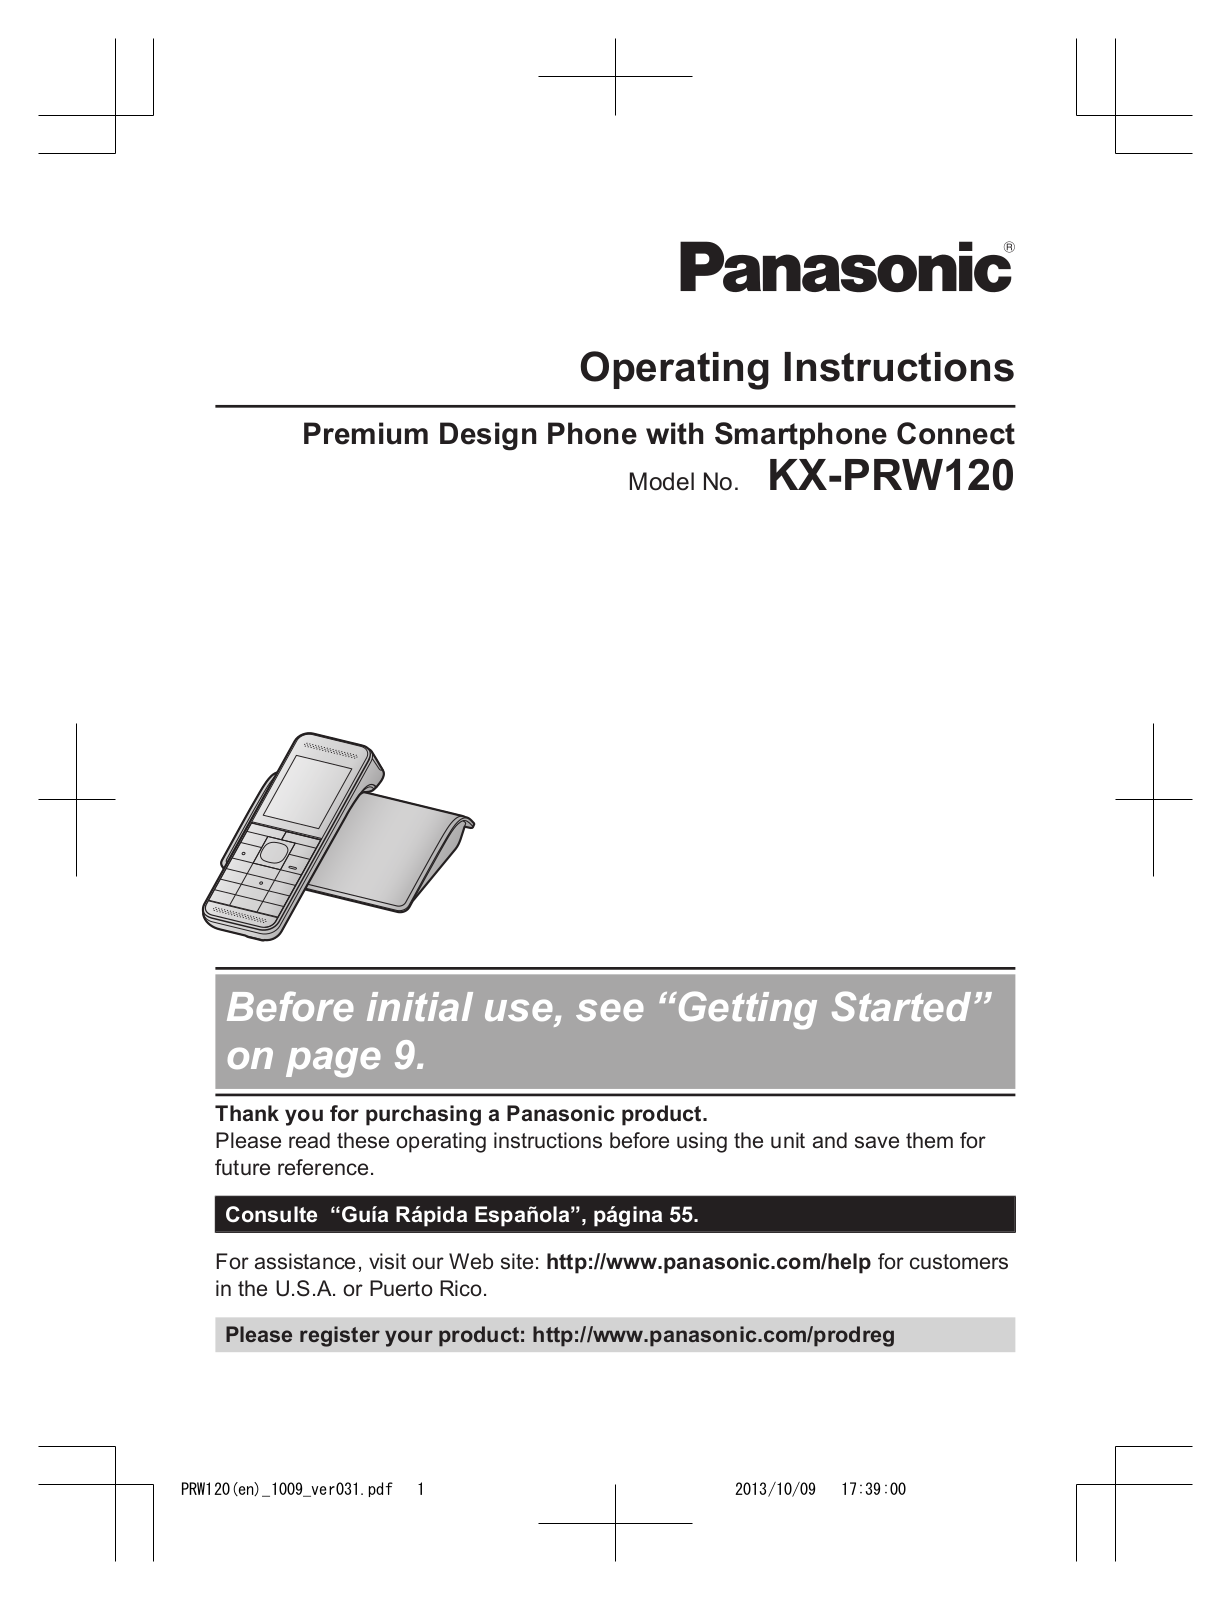 Panasonic 96NKX PRWA10, 96NKX PRW120 Users Manual